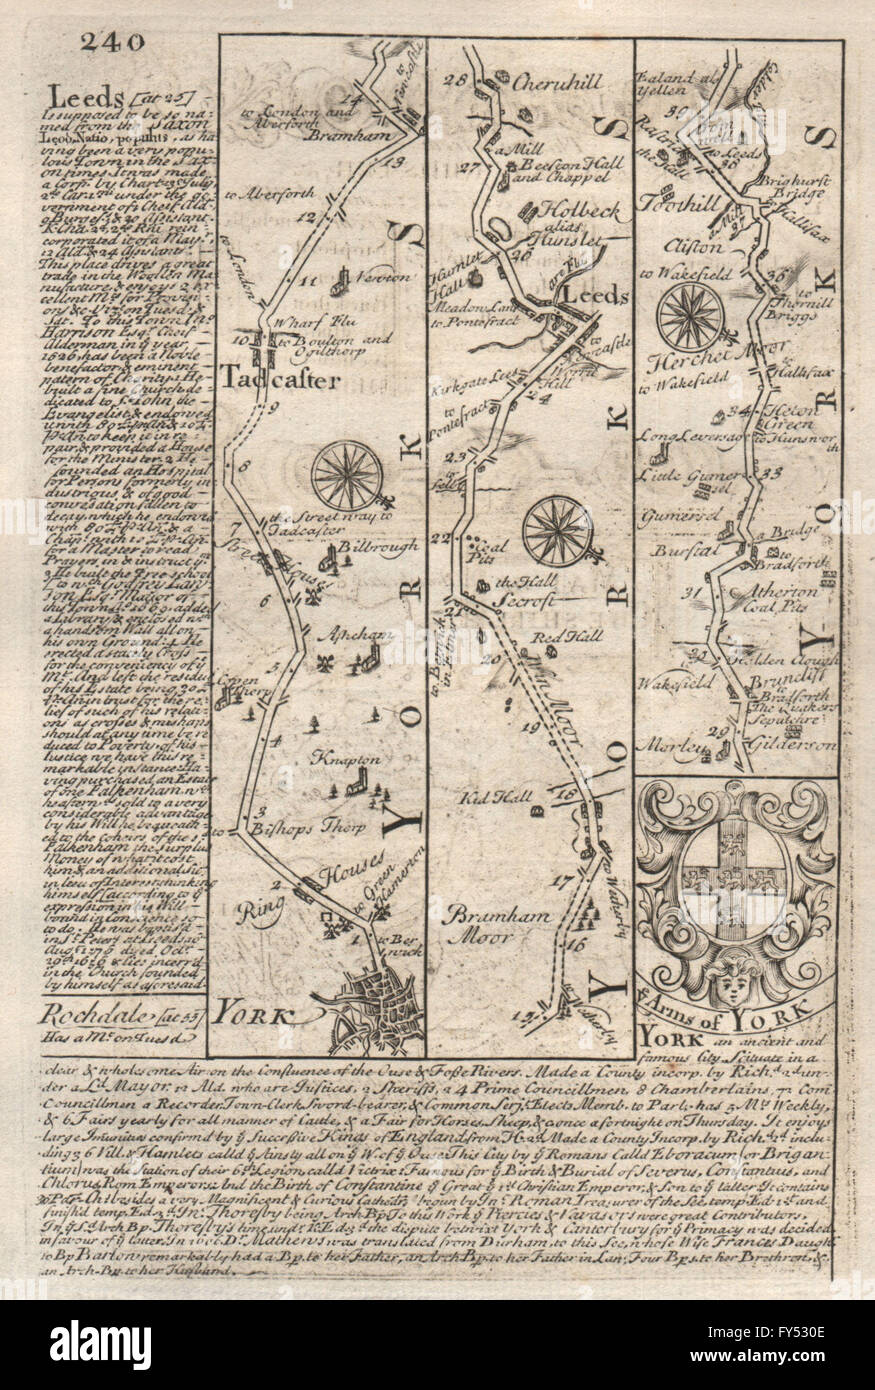 Towcester-Daventry-Dunchurch-Ryton on Dunsmore road map by OWEN & BOWEN 1753 